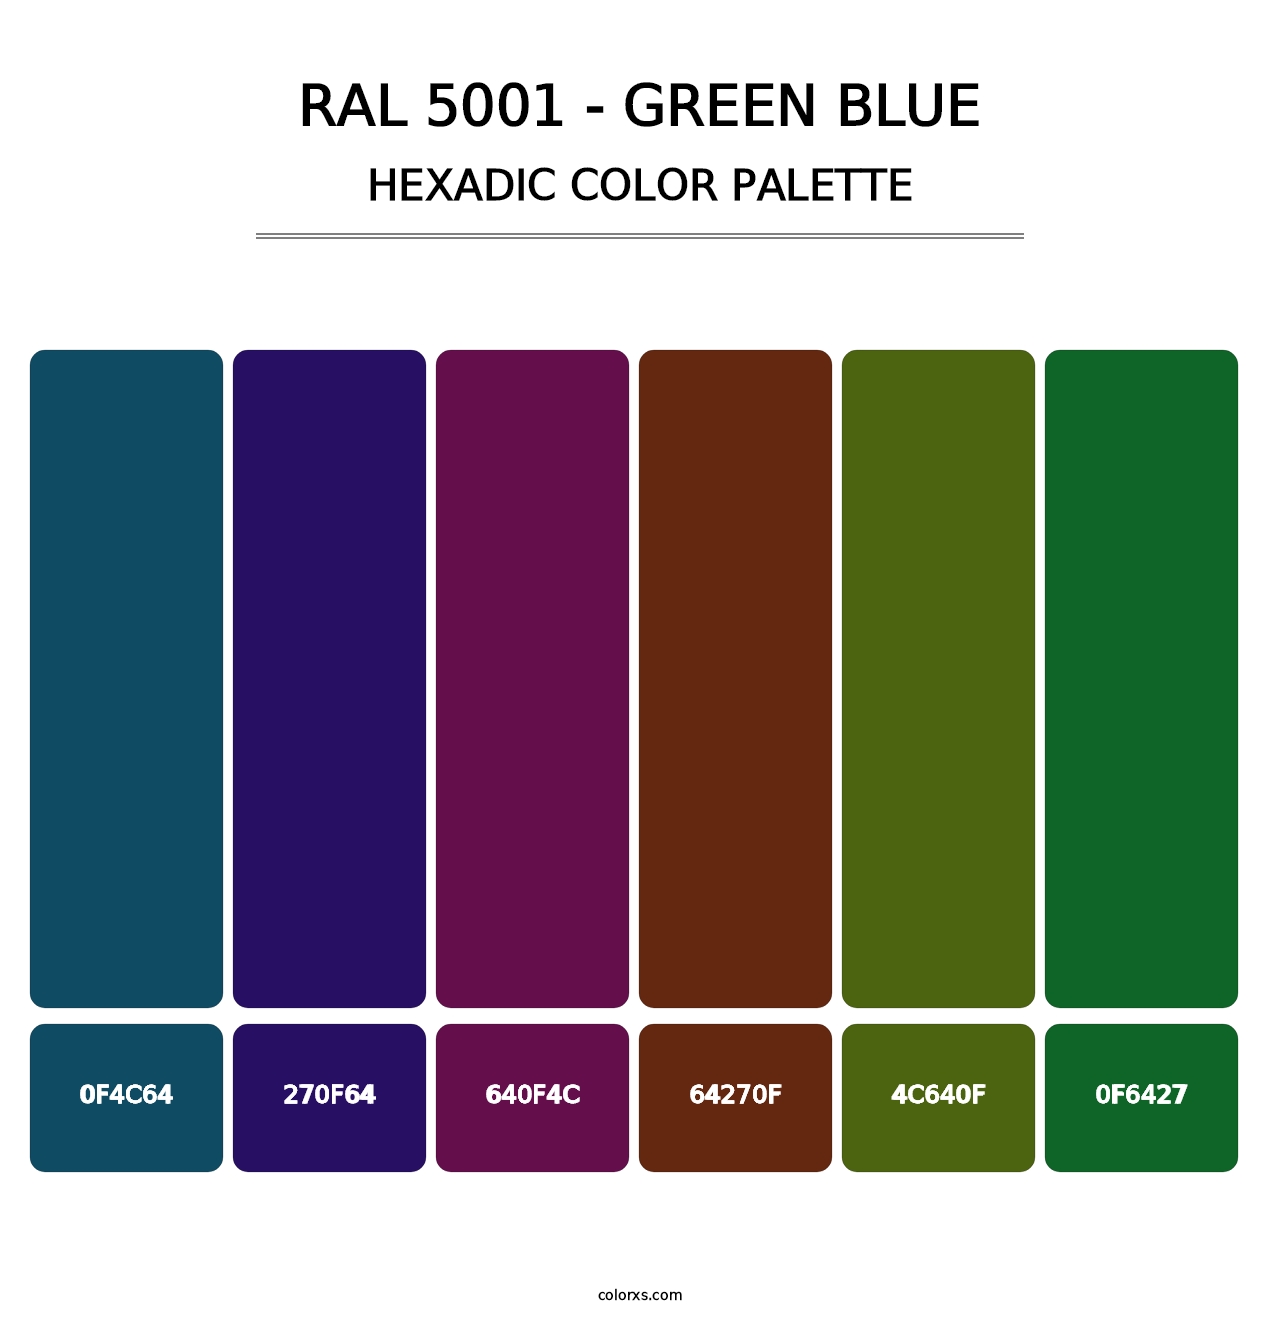 RAL 5001 - Green Blue - Hexadic Color Palette